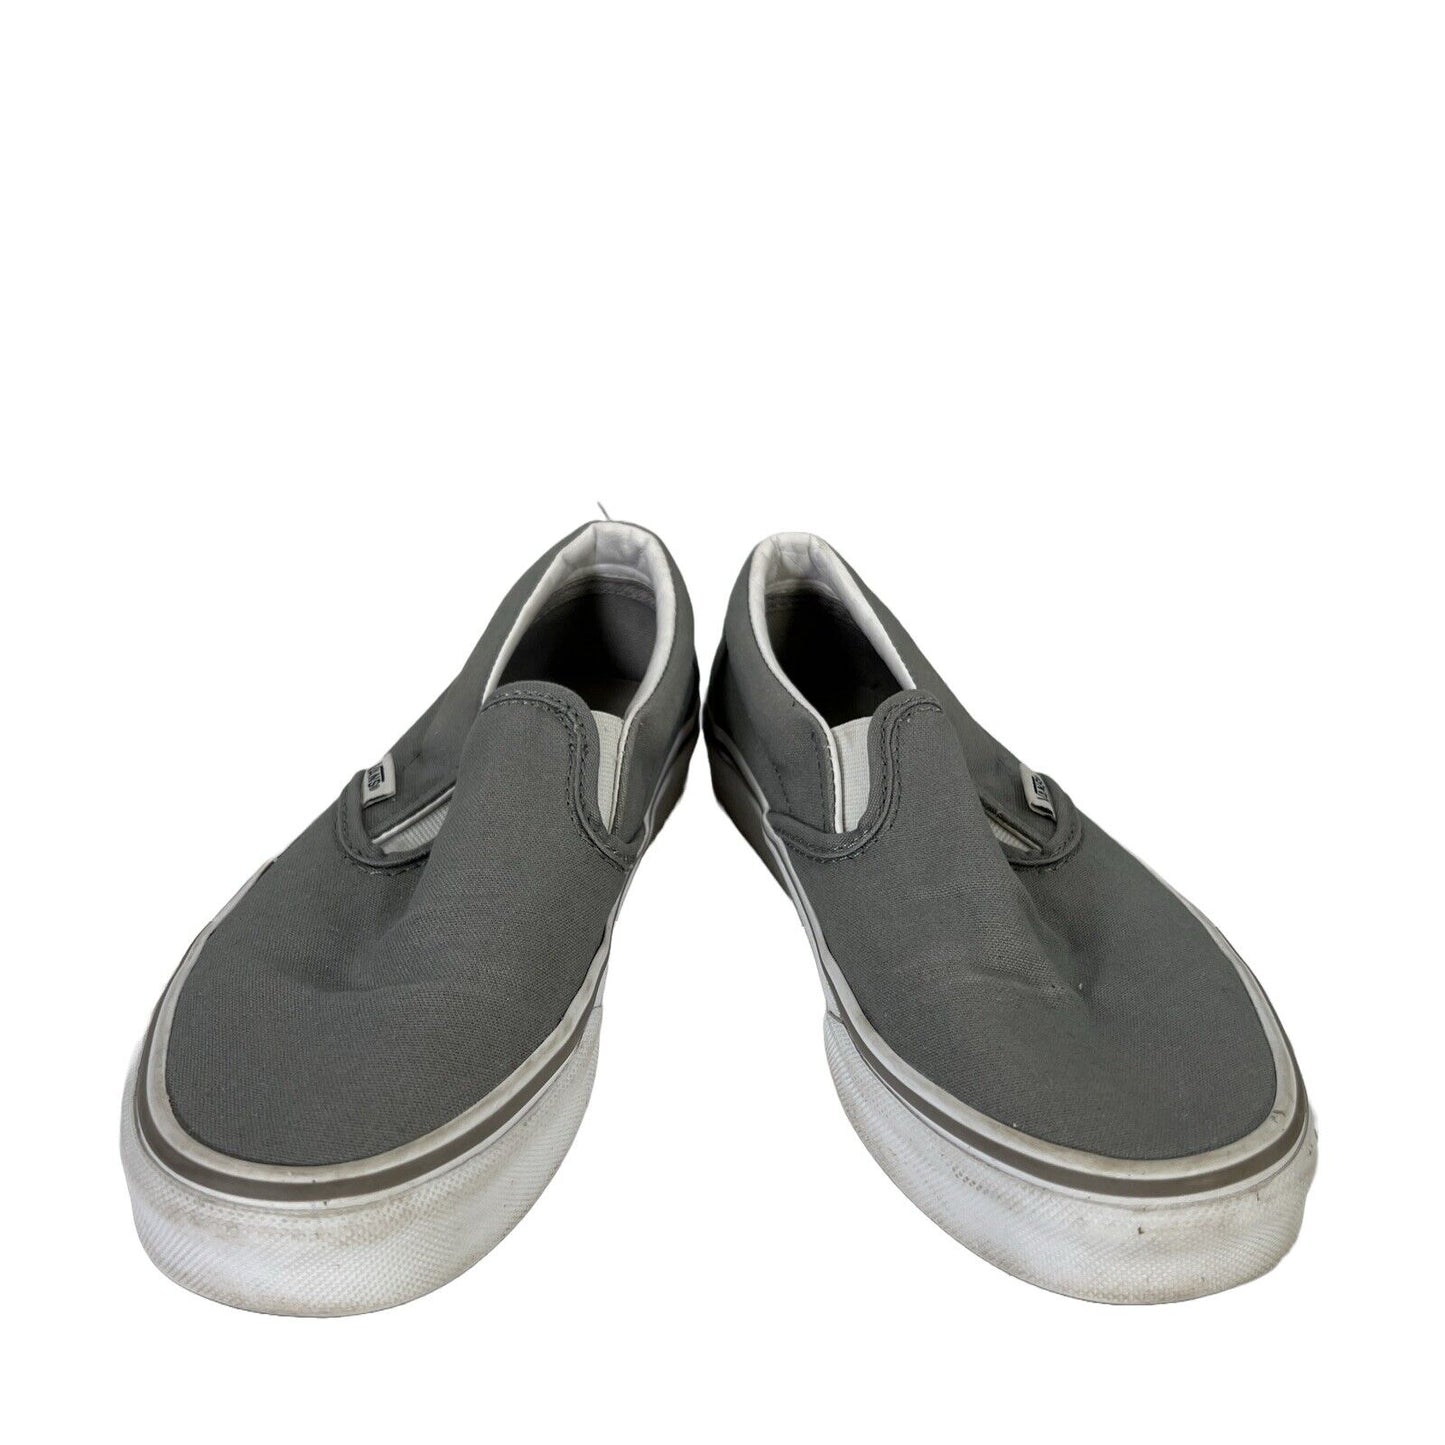 Vans Women's Gray Canvas Slip On Casual Skate Sneakers - 7